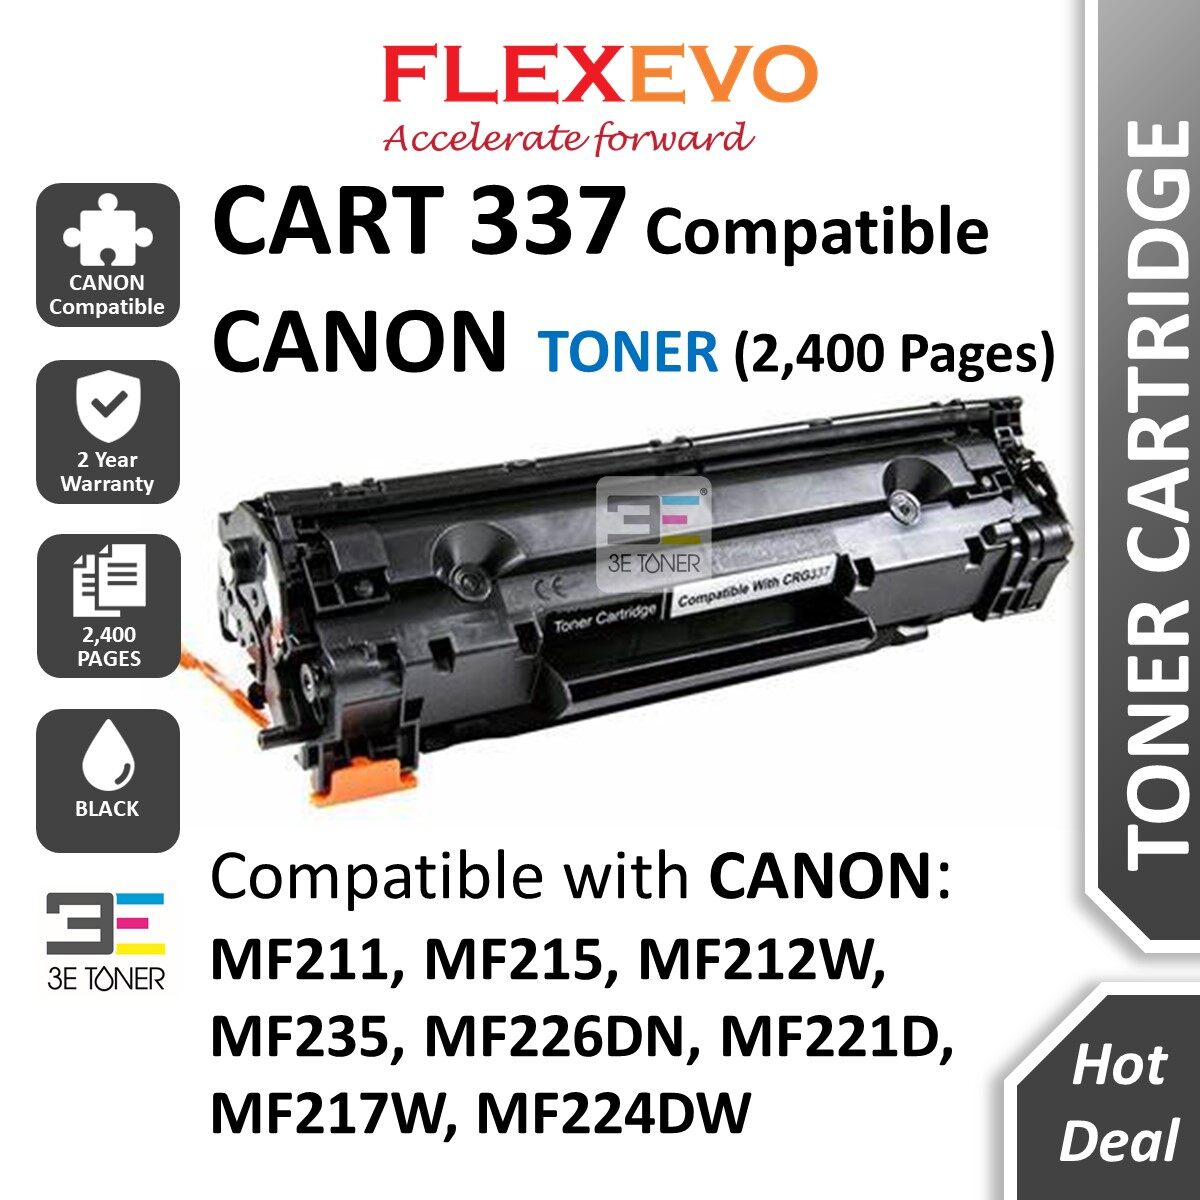 Compatible Canon Cartridge 337 Toner for MF211 MF215 MF212W MF235